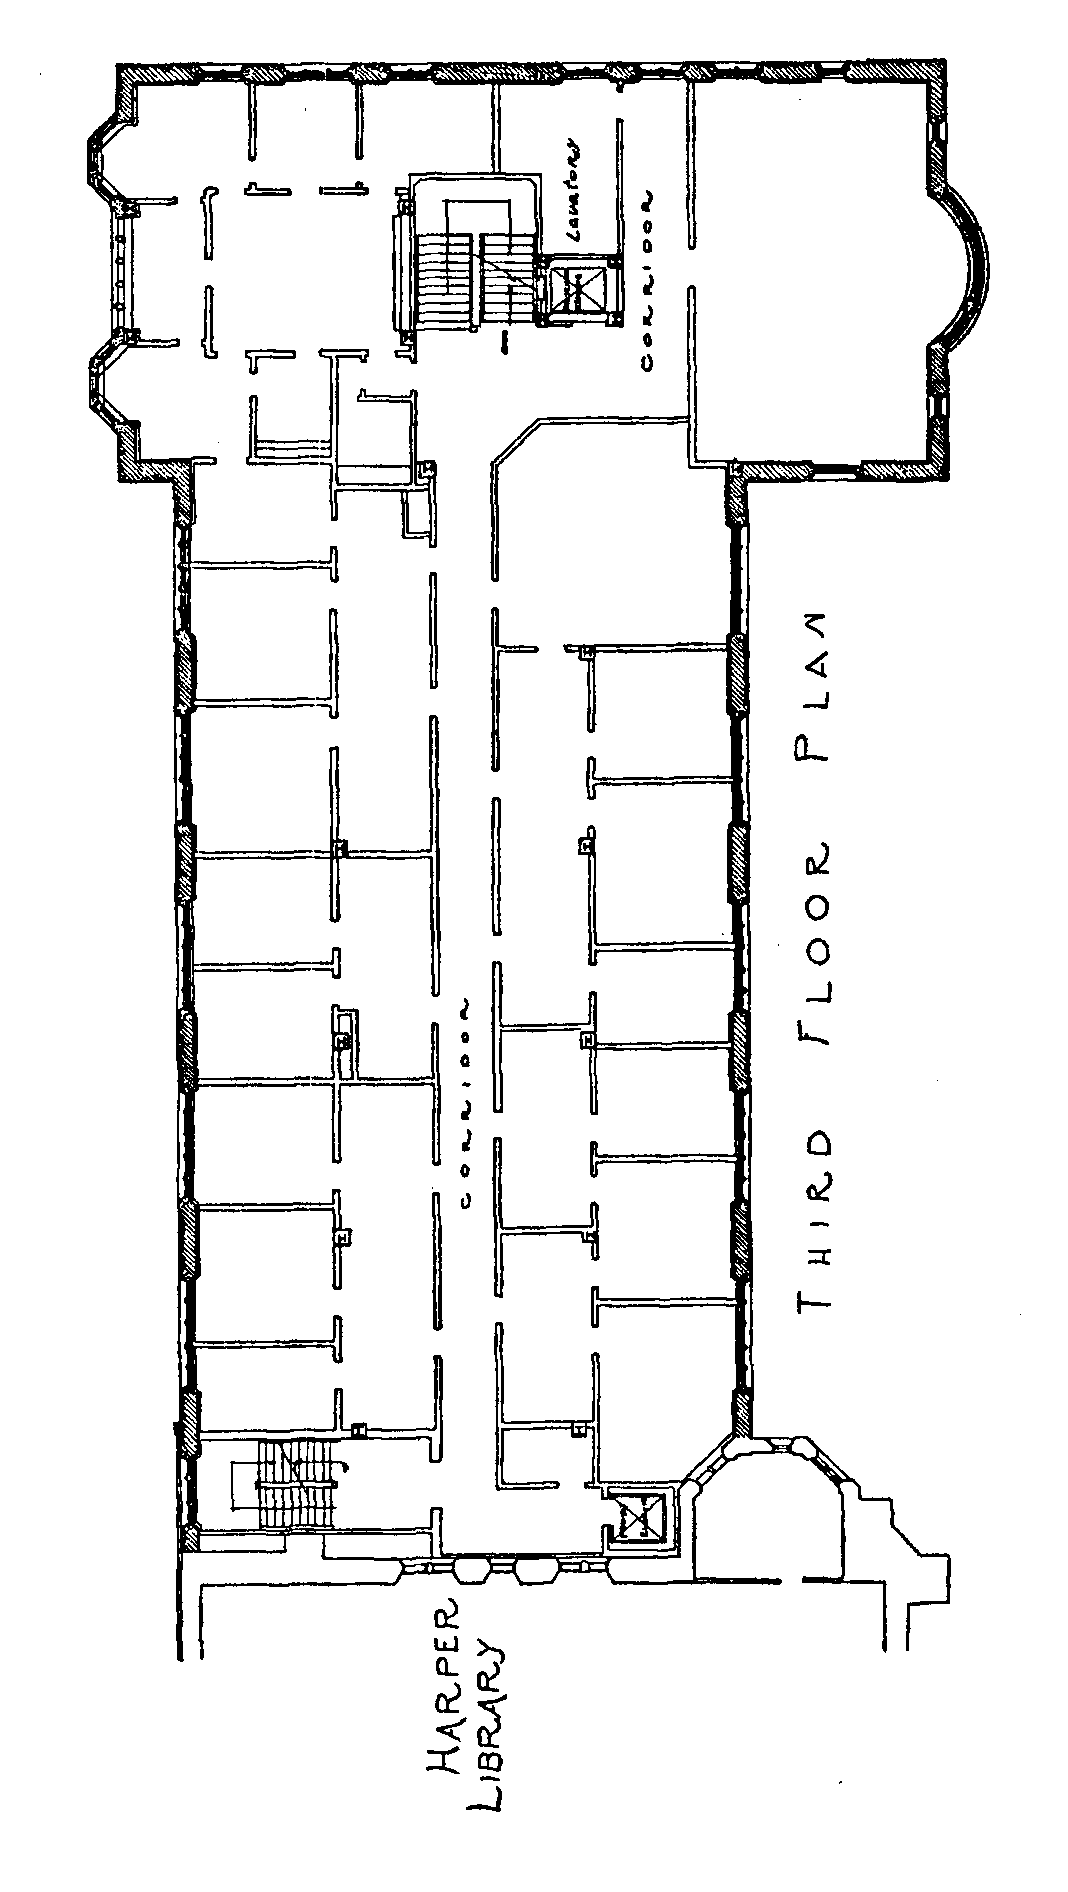 Floor Plan of 3rd floor of Social Research Building, University of Chicago